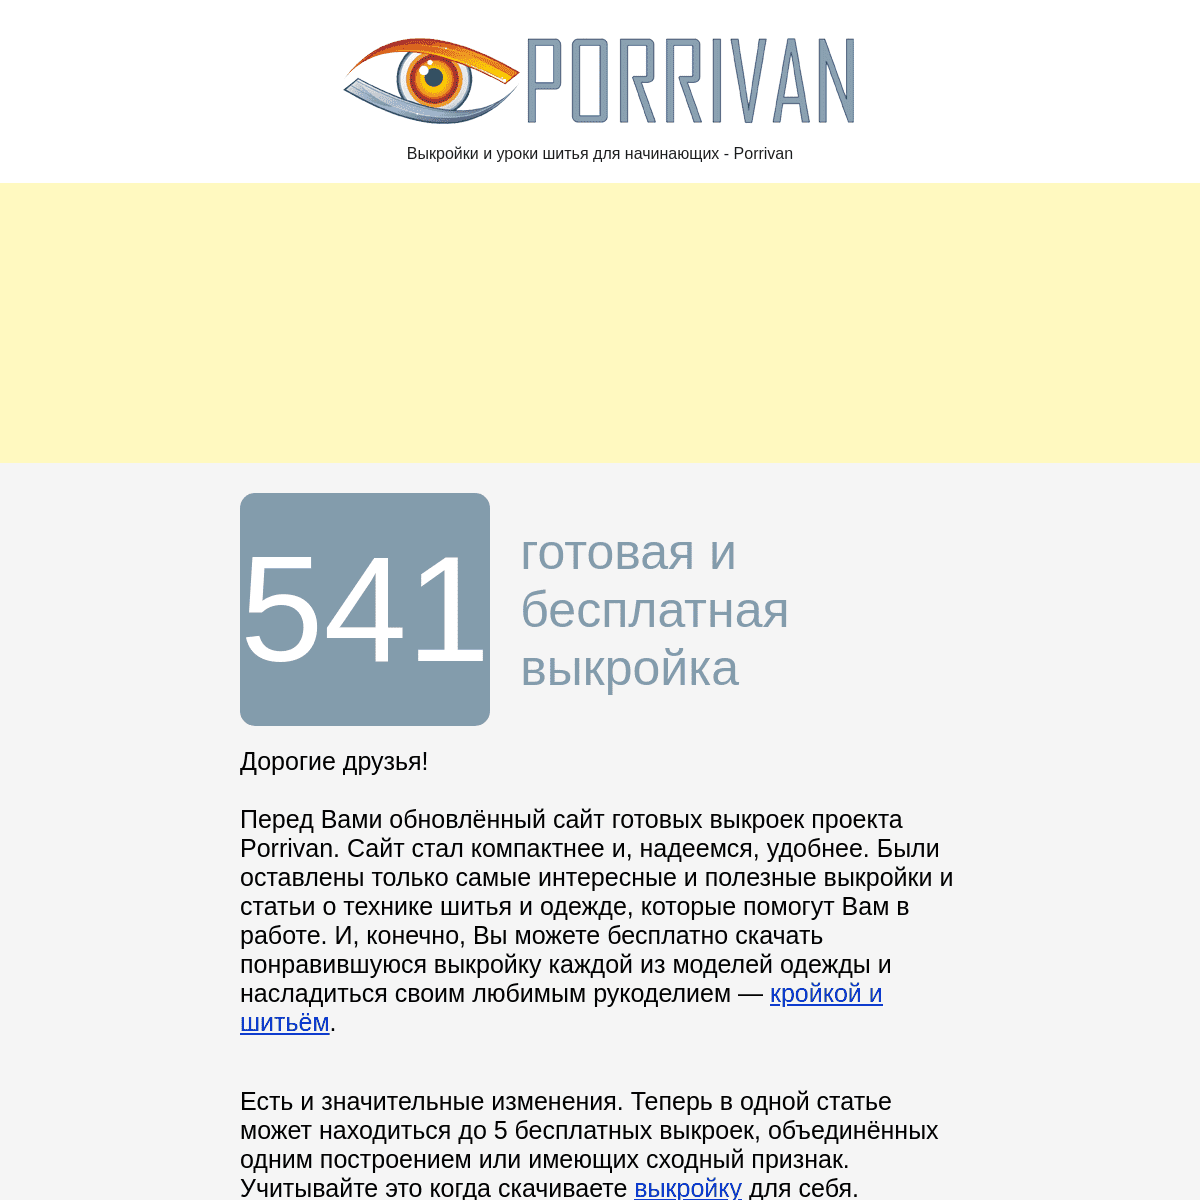 A complete backup of porivan.ru